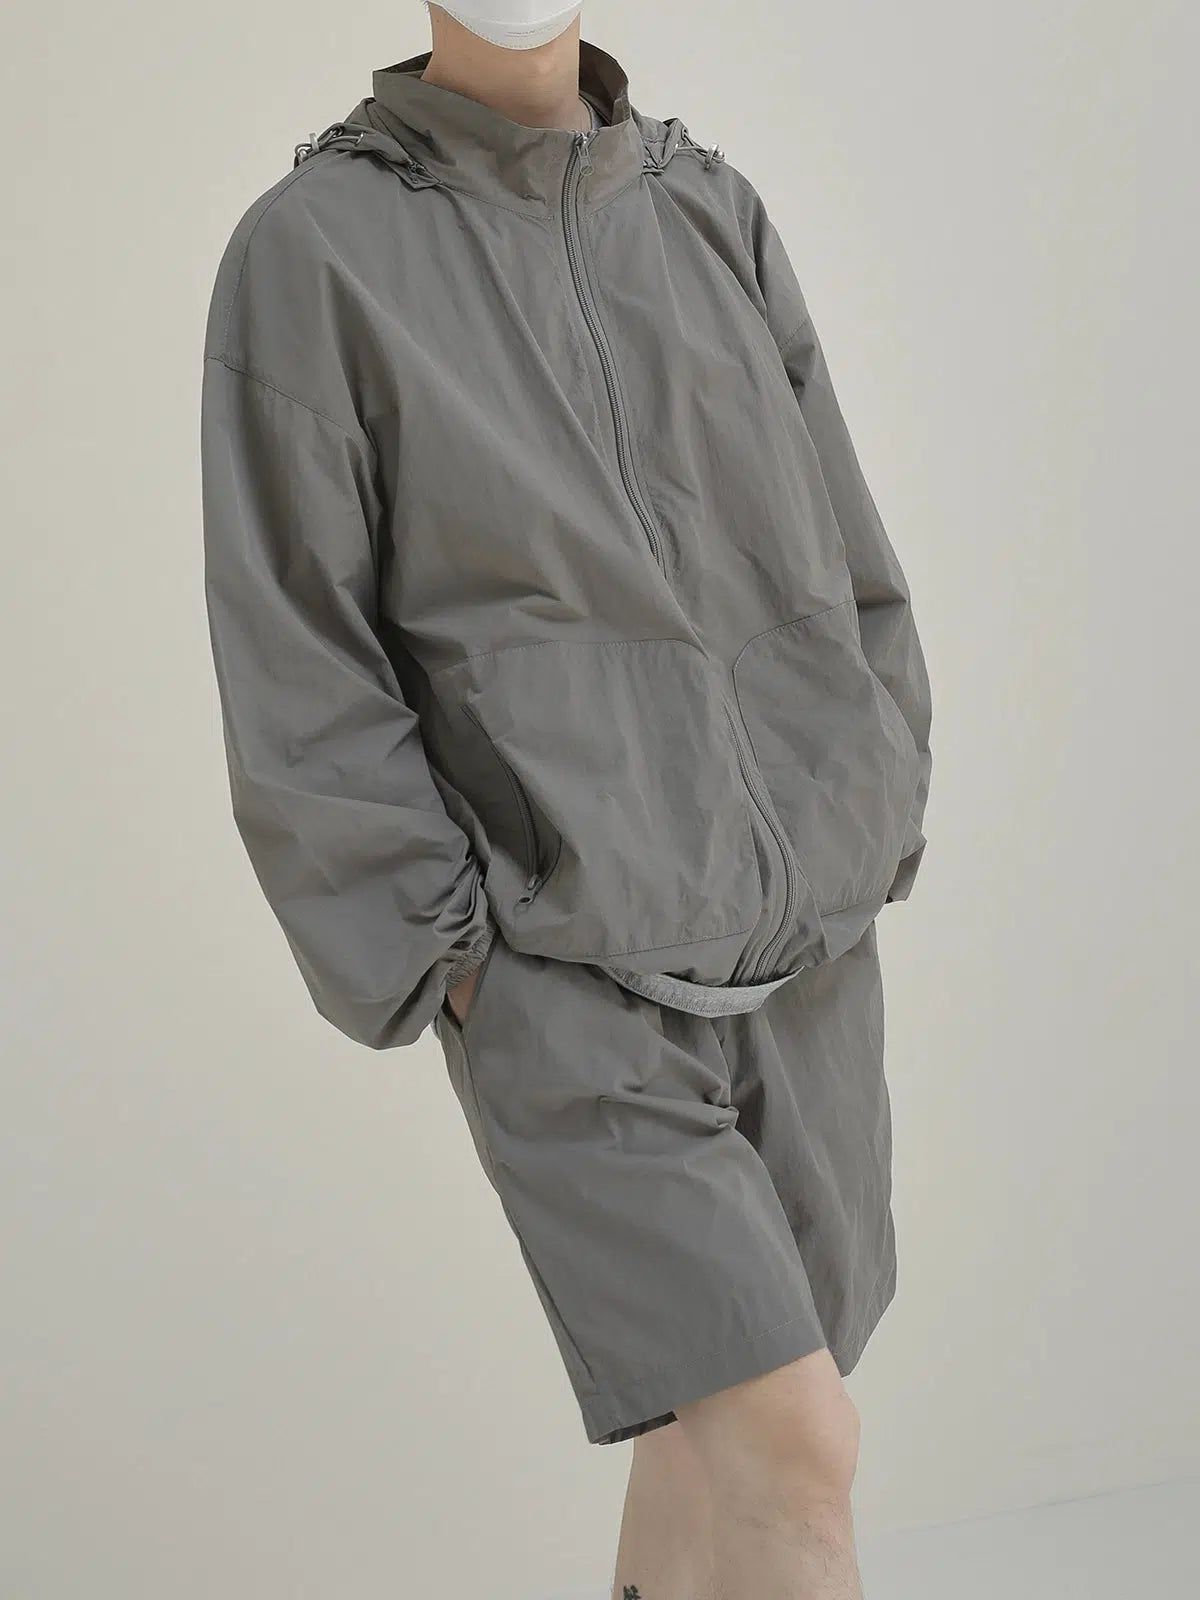 Zhou Zipped and Hooded Sun Protection Jacket-korean-fashion-Jacket-Zhou's Closet-OH Garments